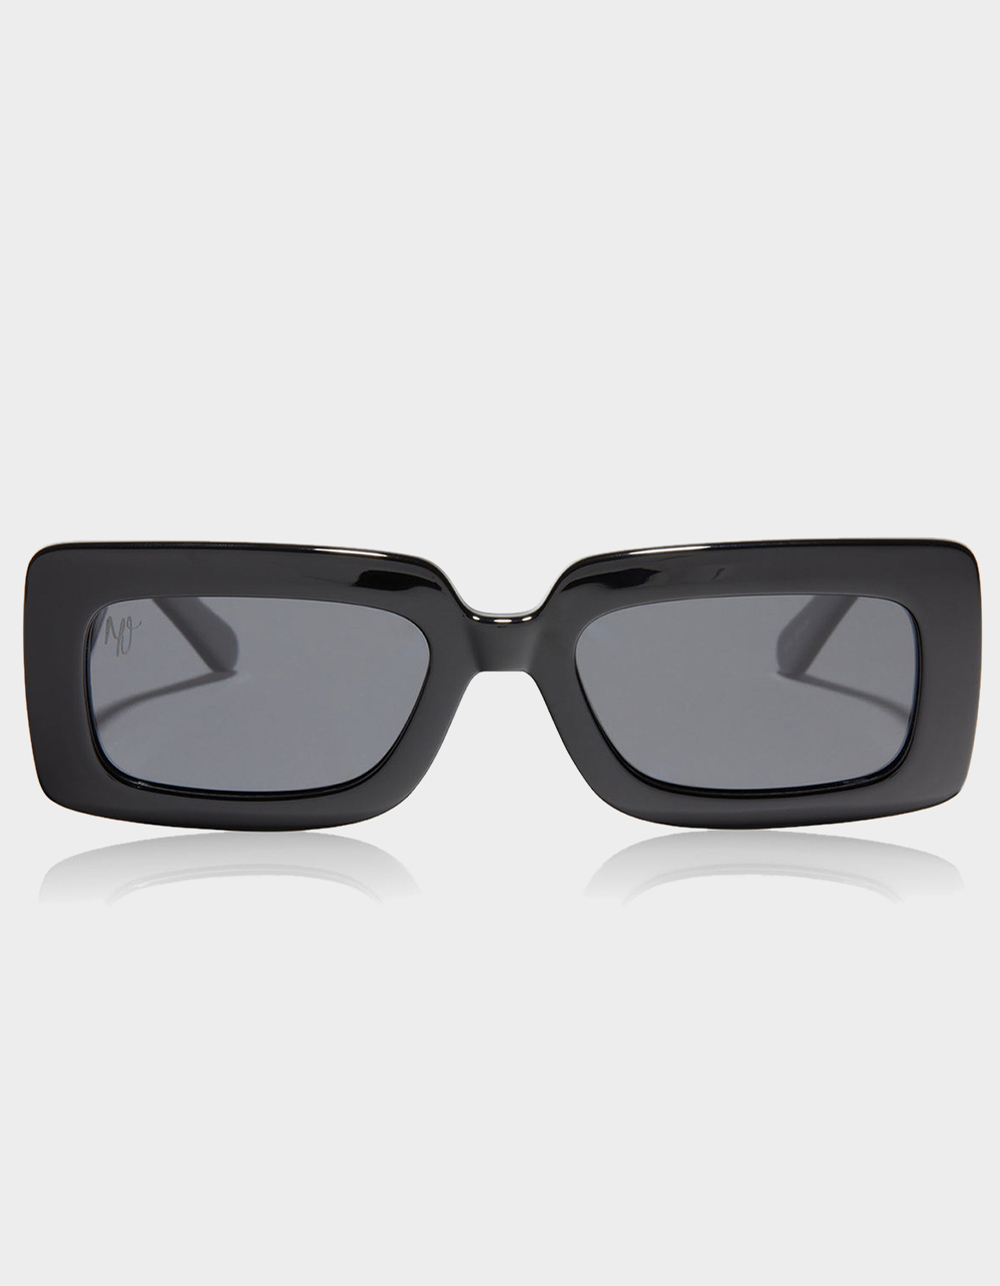 Rsq Sonny Rectangle Sunglasses - Tortoise - One Size